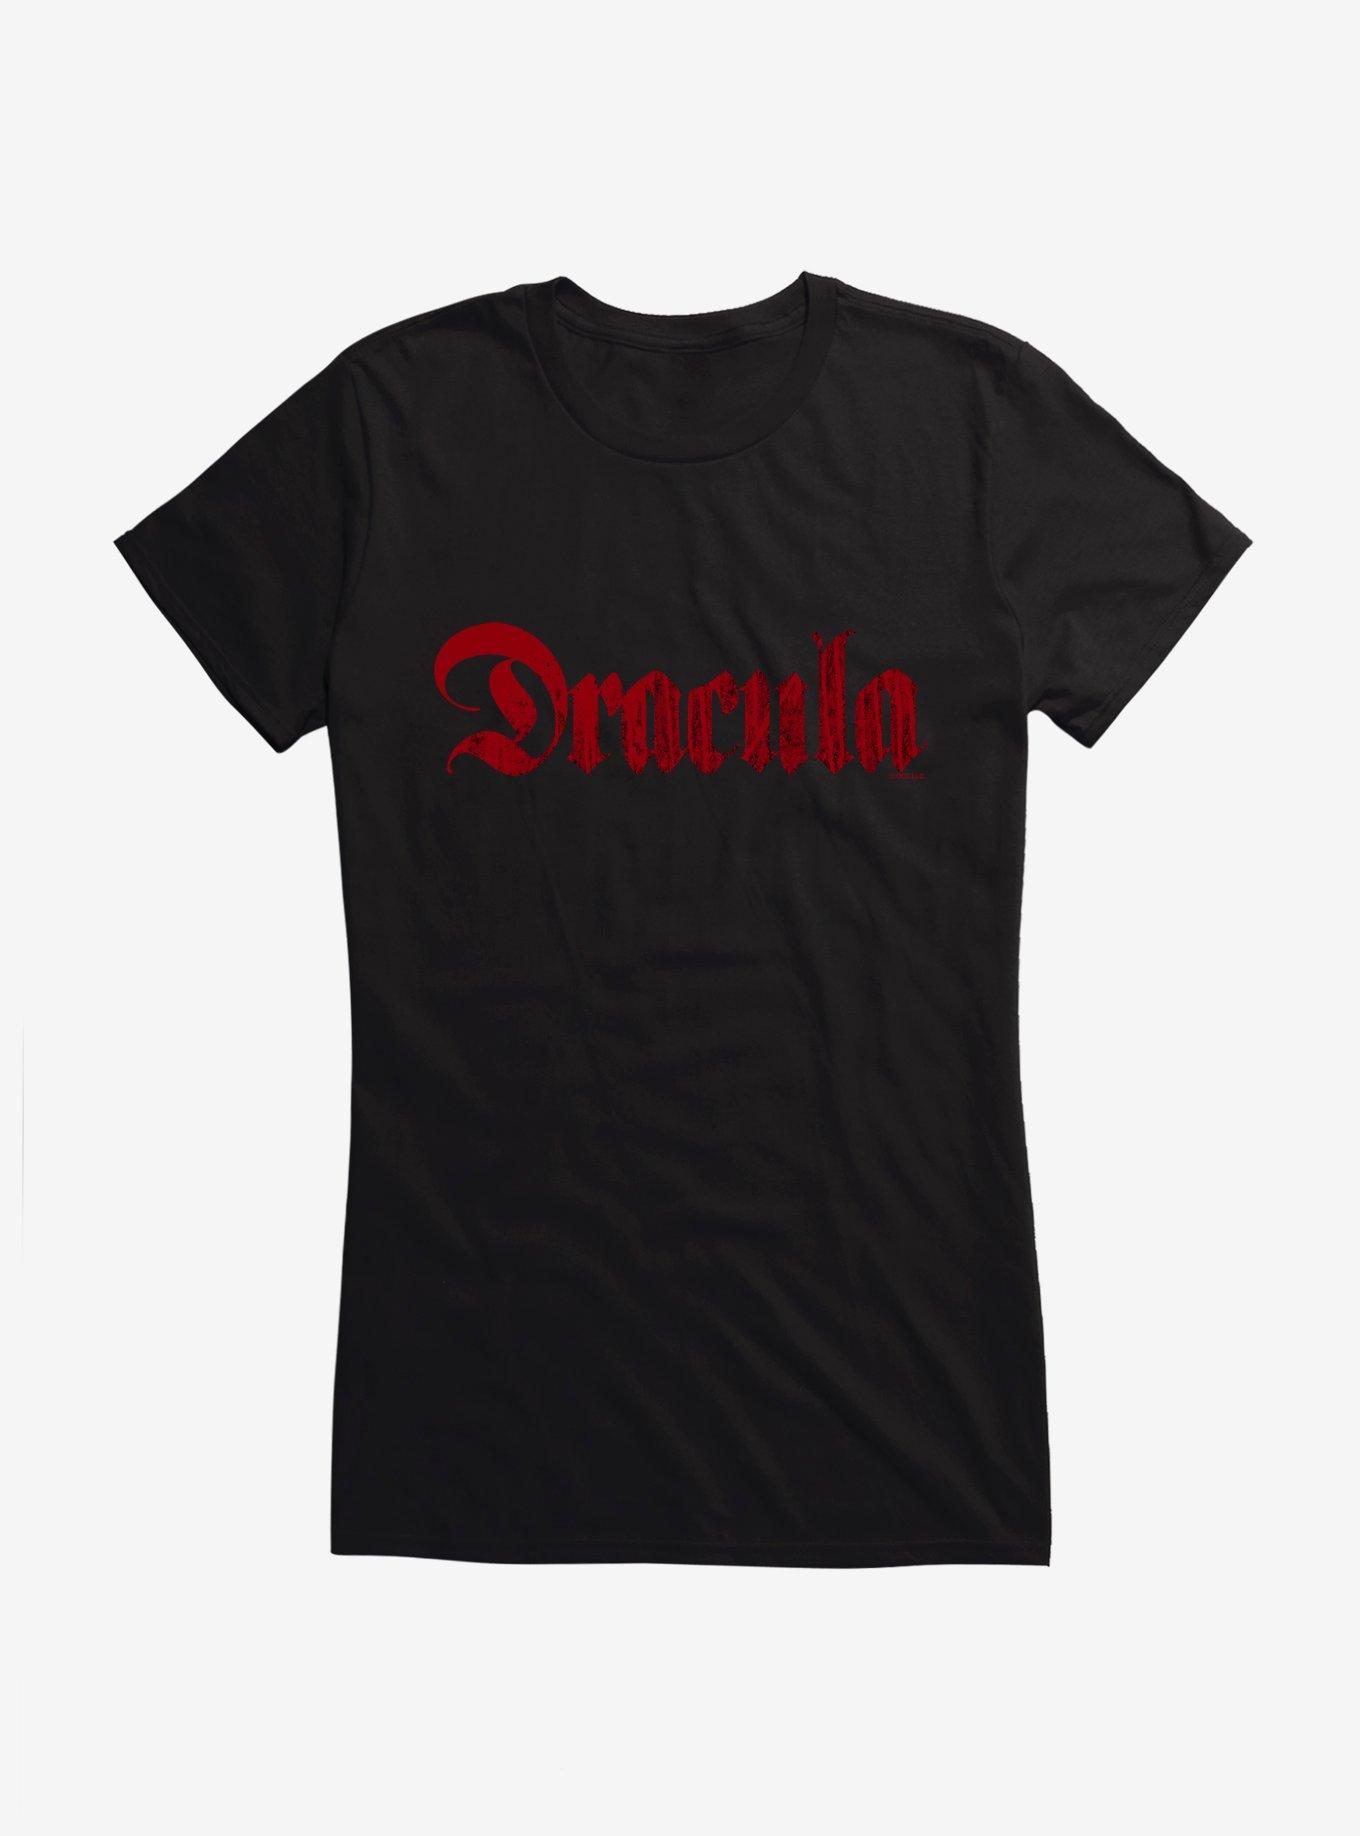 Universal Monsters Dracula Logo Script Girls T-Shirt